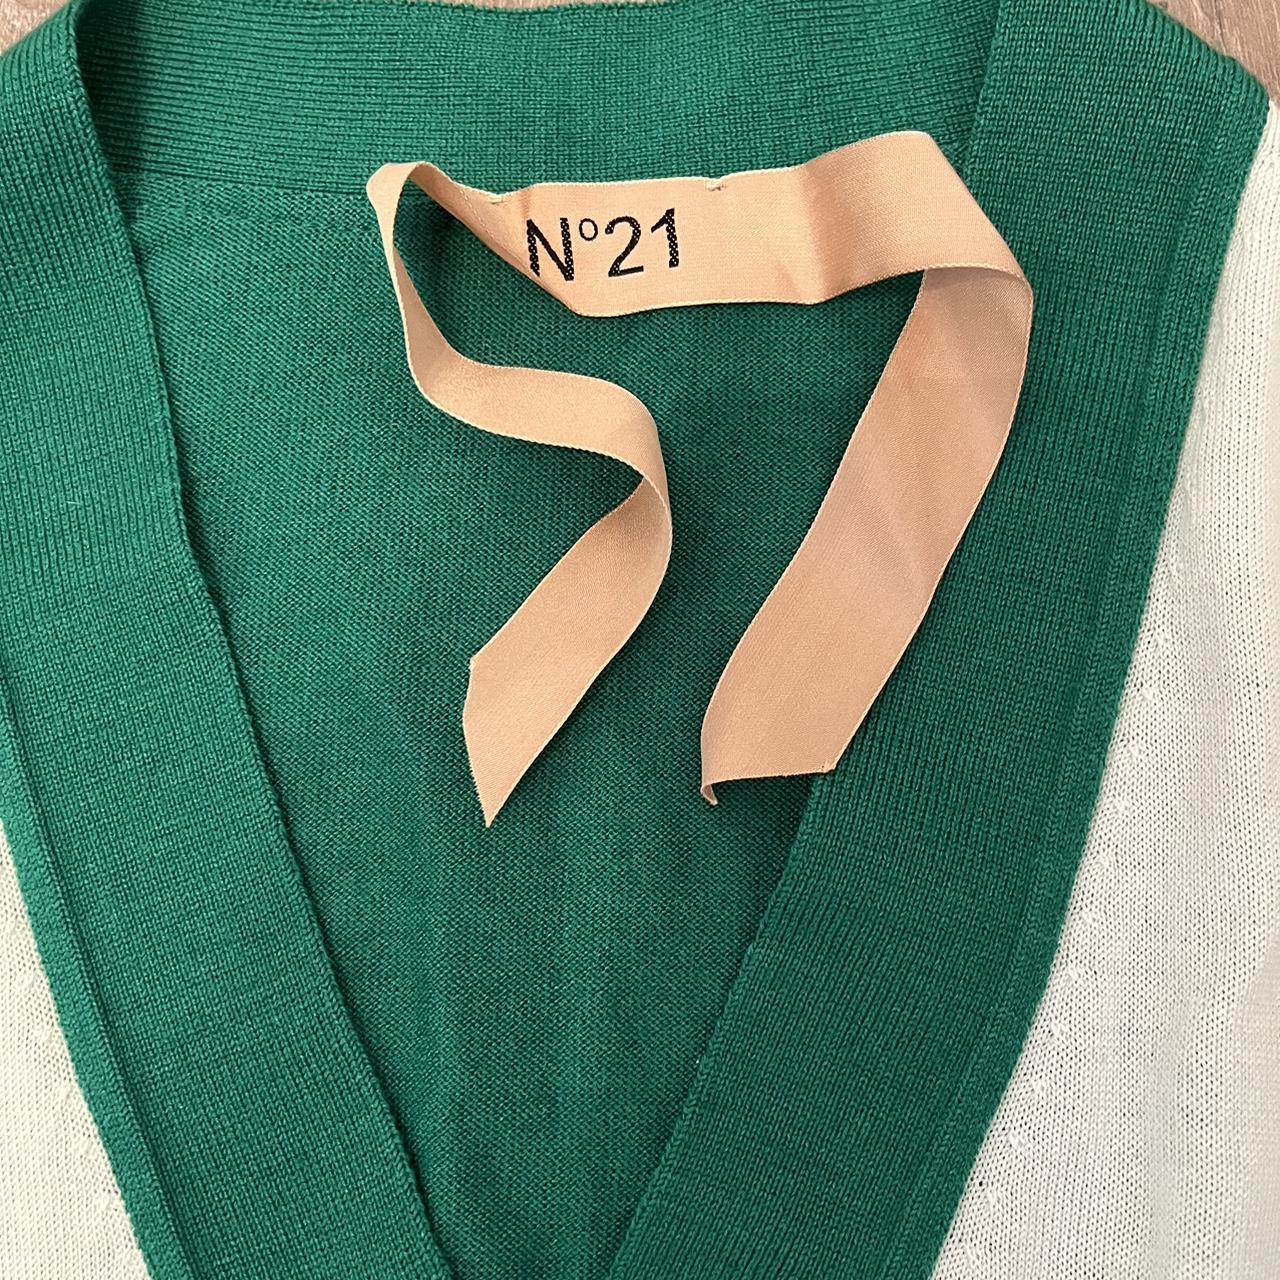 Nº21 Women's Green and Pink Cardigan (3)